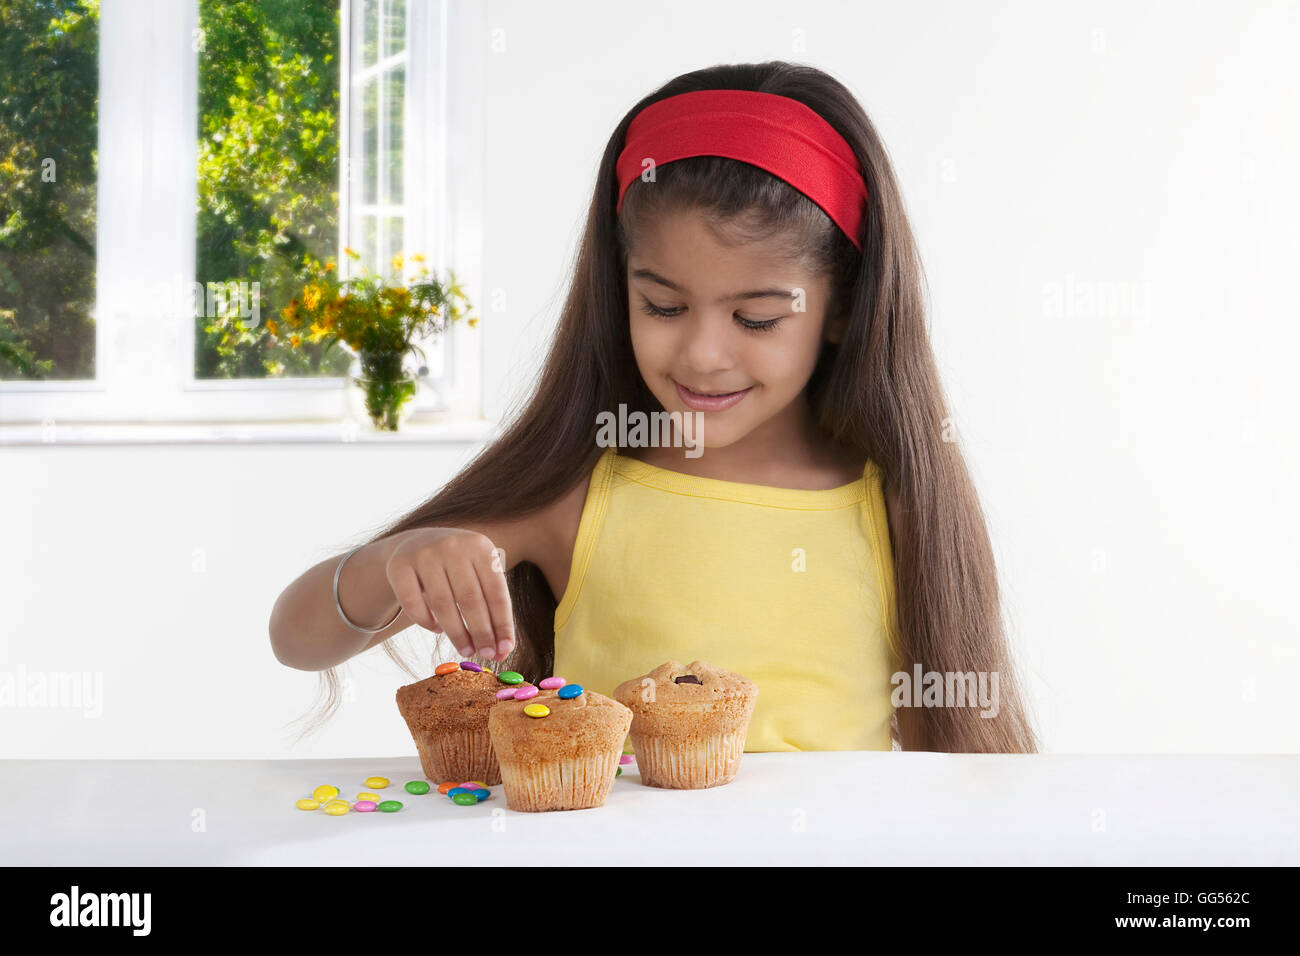 Girl decorating muffins Stock Photo